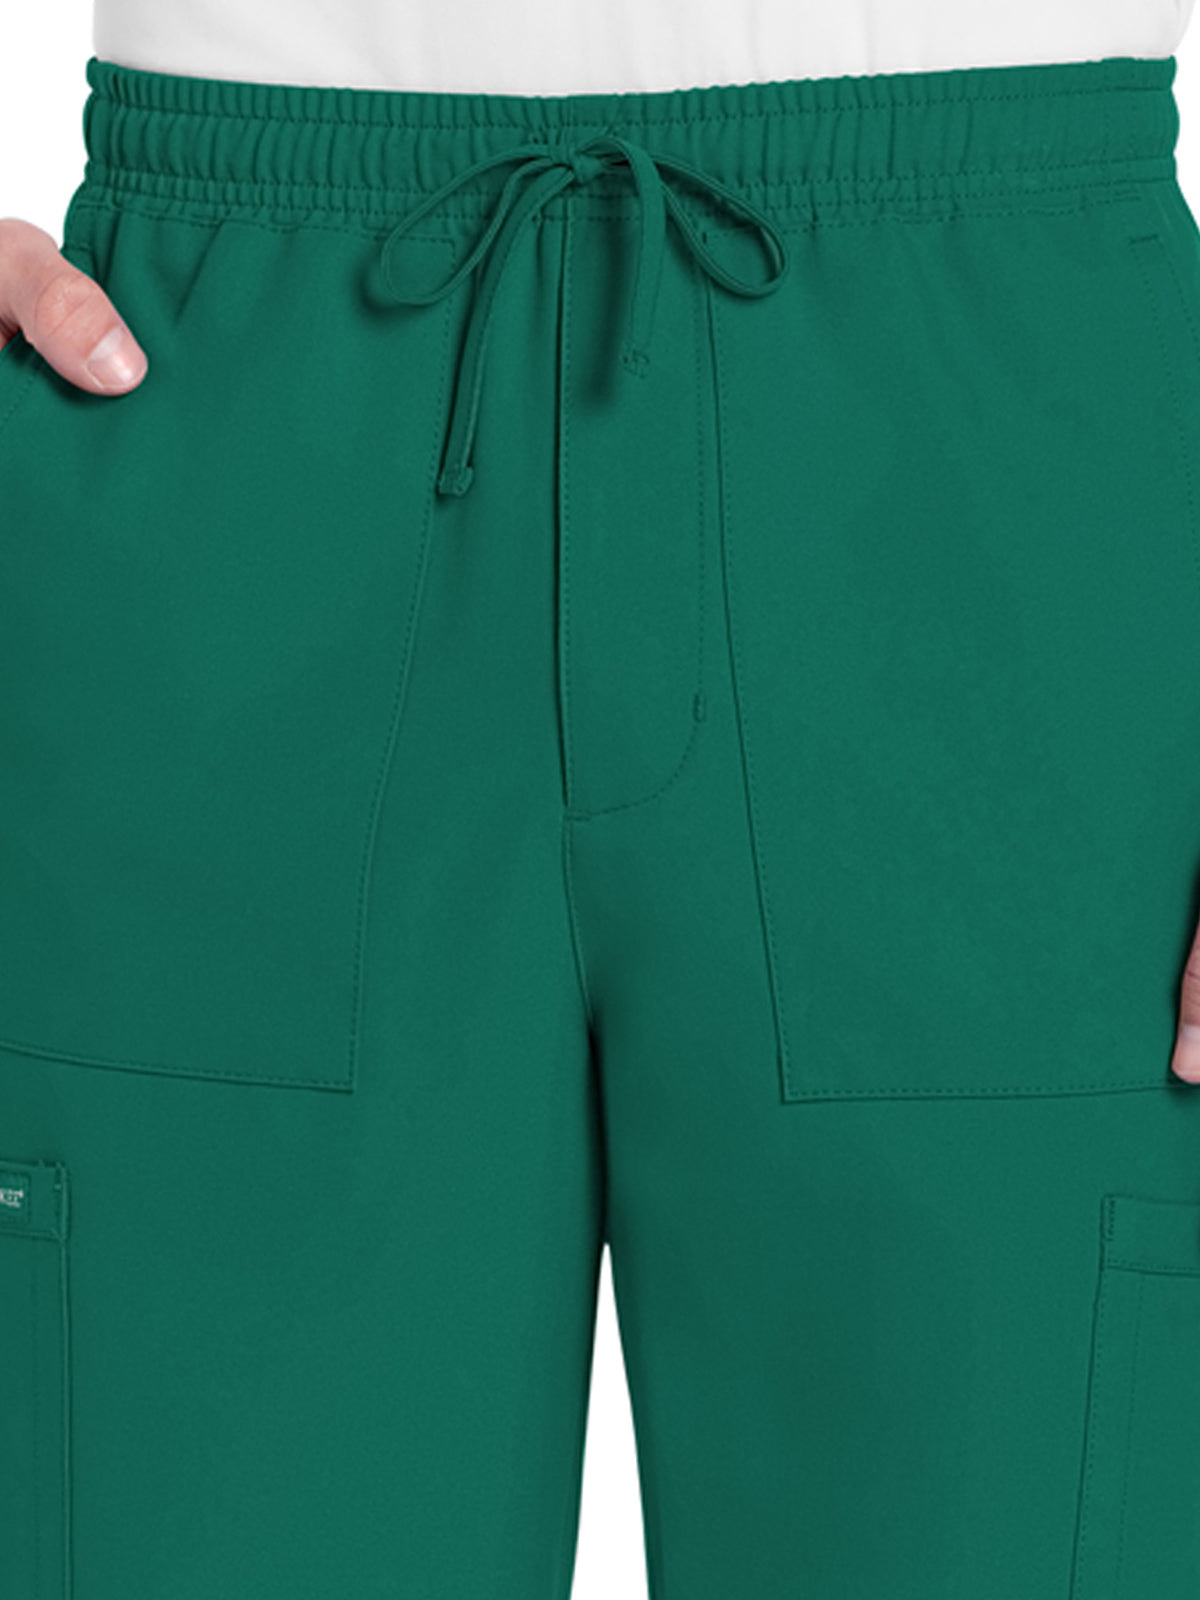 Men's 6-Pocket Straight Leg Pant - CK279A - Hunter Green